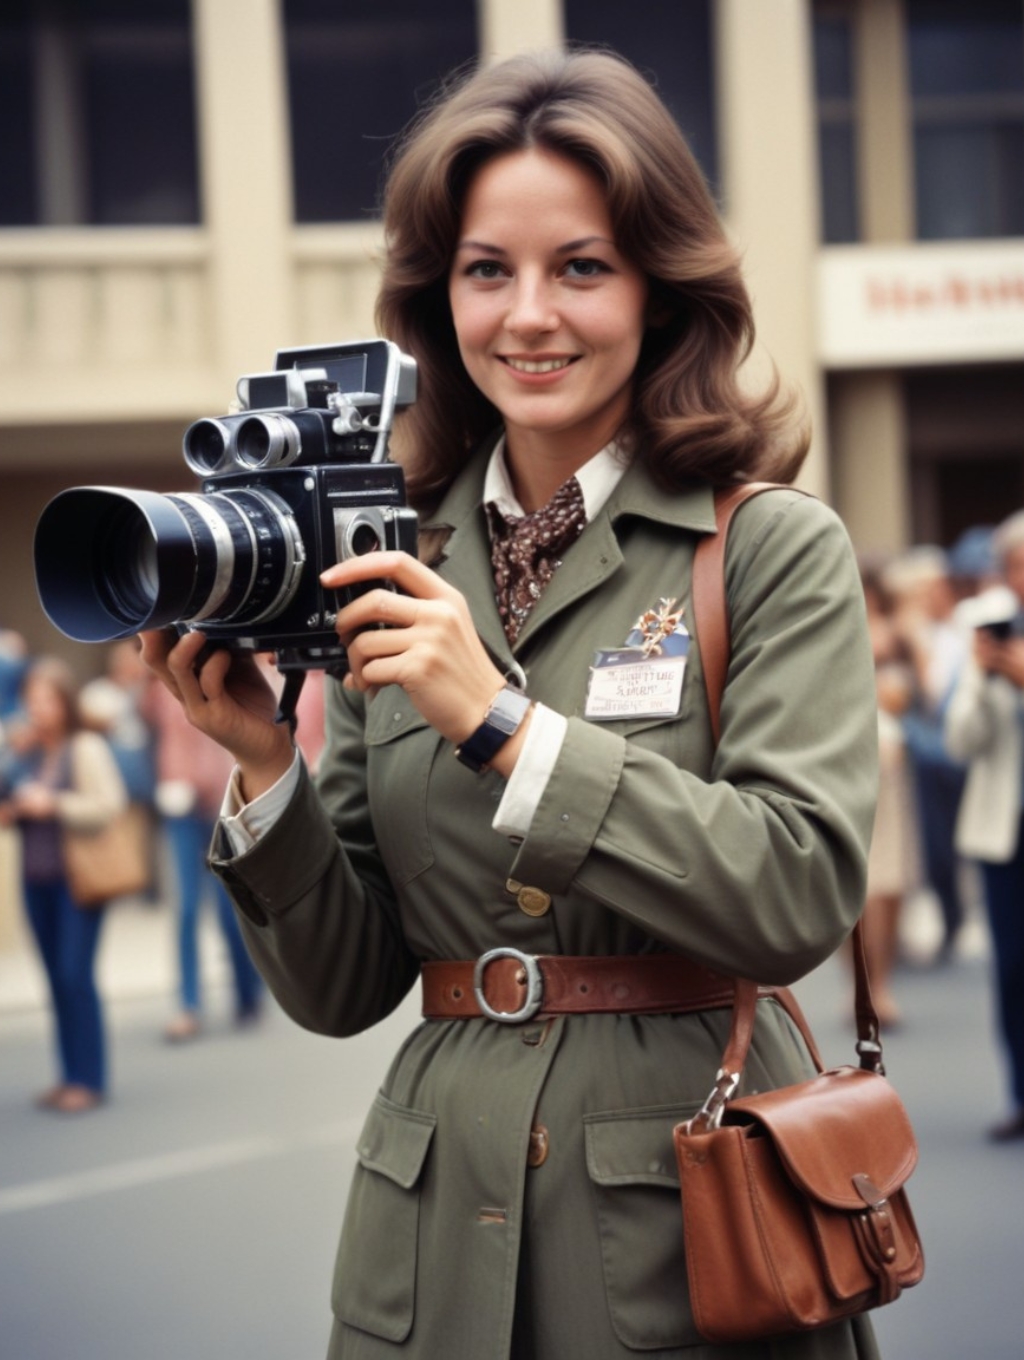 Vintage Paparazzi Women: Snapshot Frames & Photographs-Theme:2